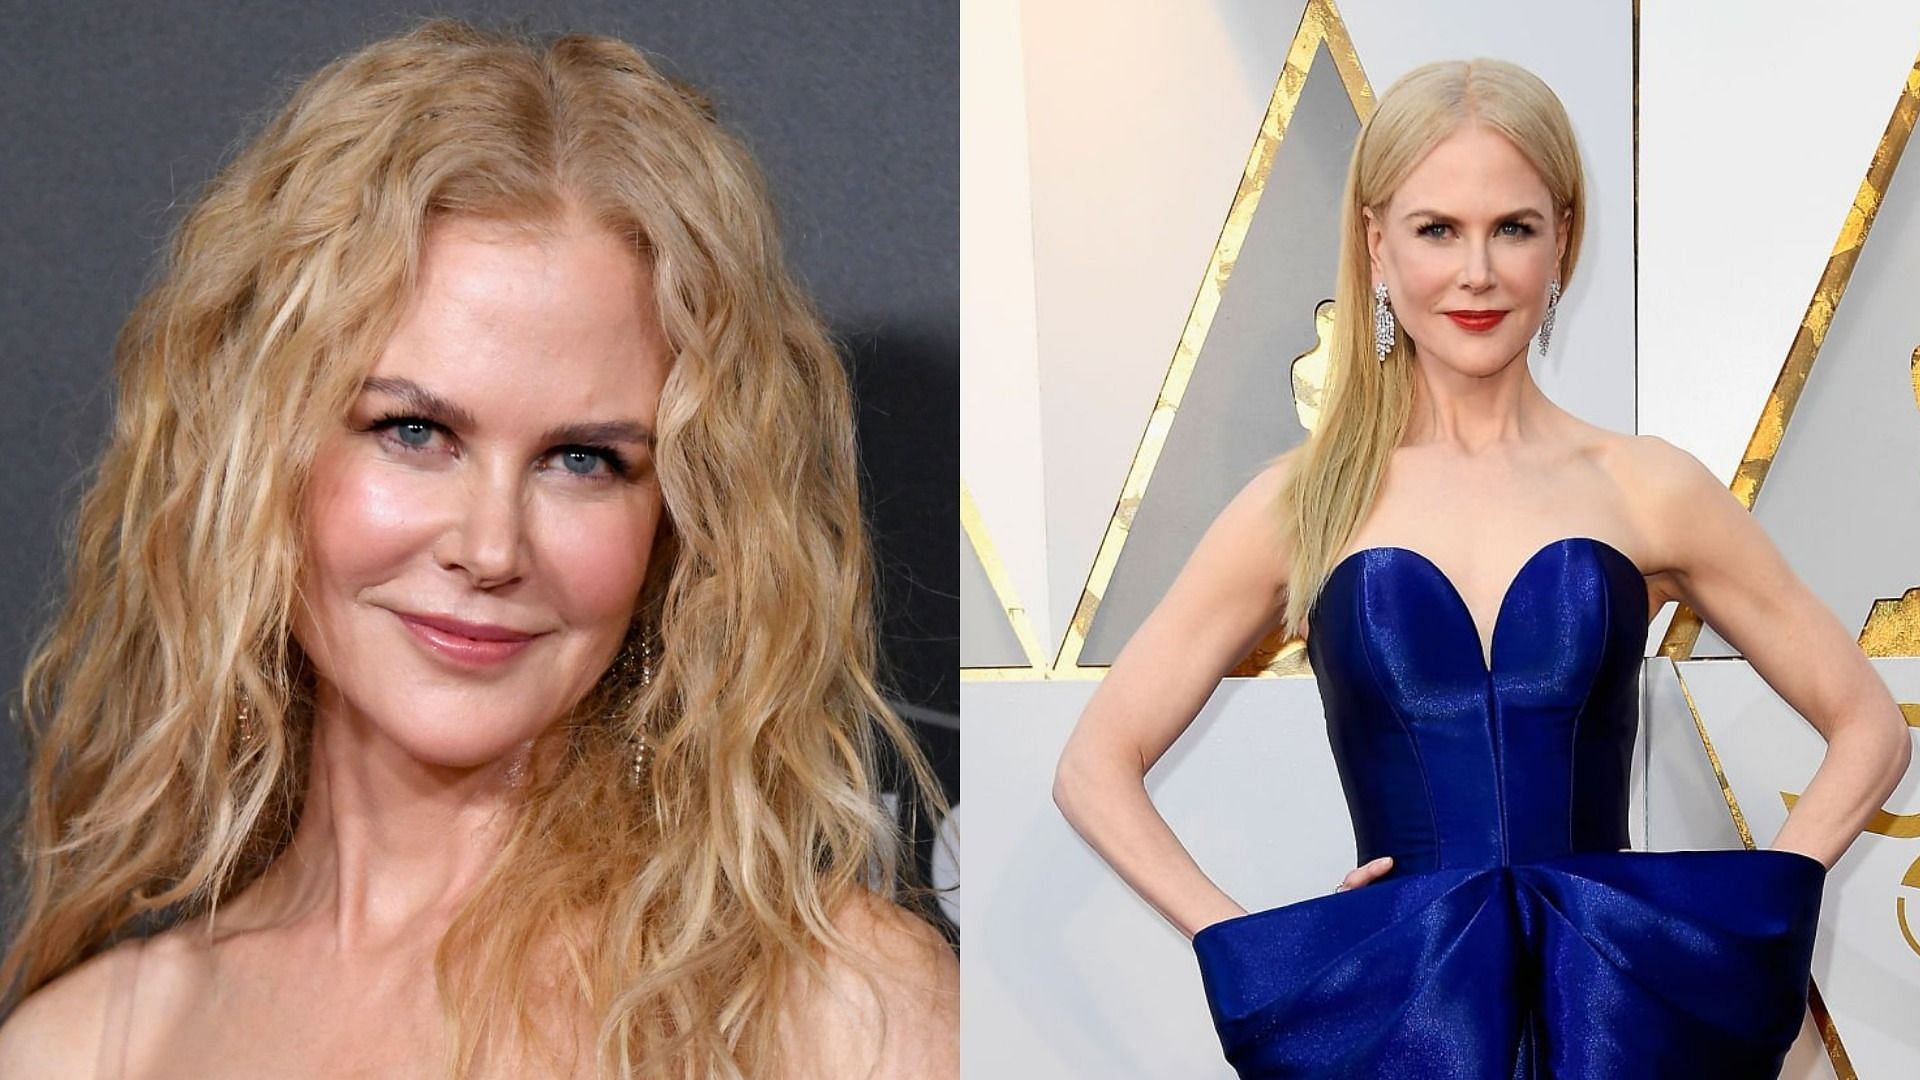 Nicole Kidman's Vanity Fair Cover Is Very Photoshopped